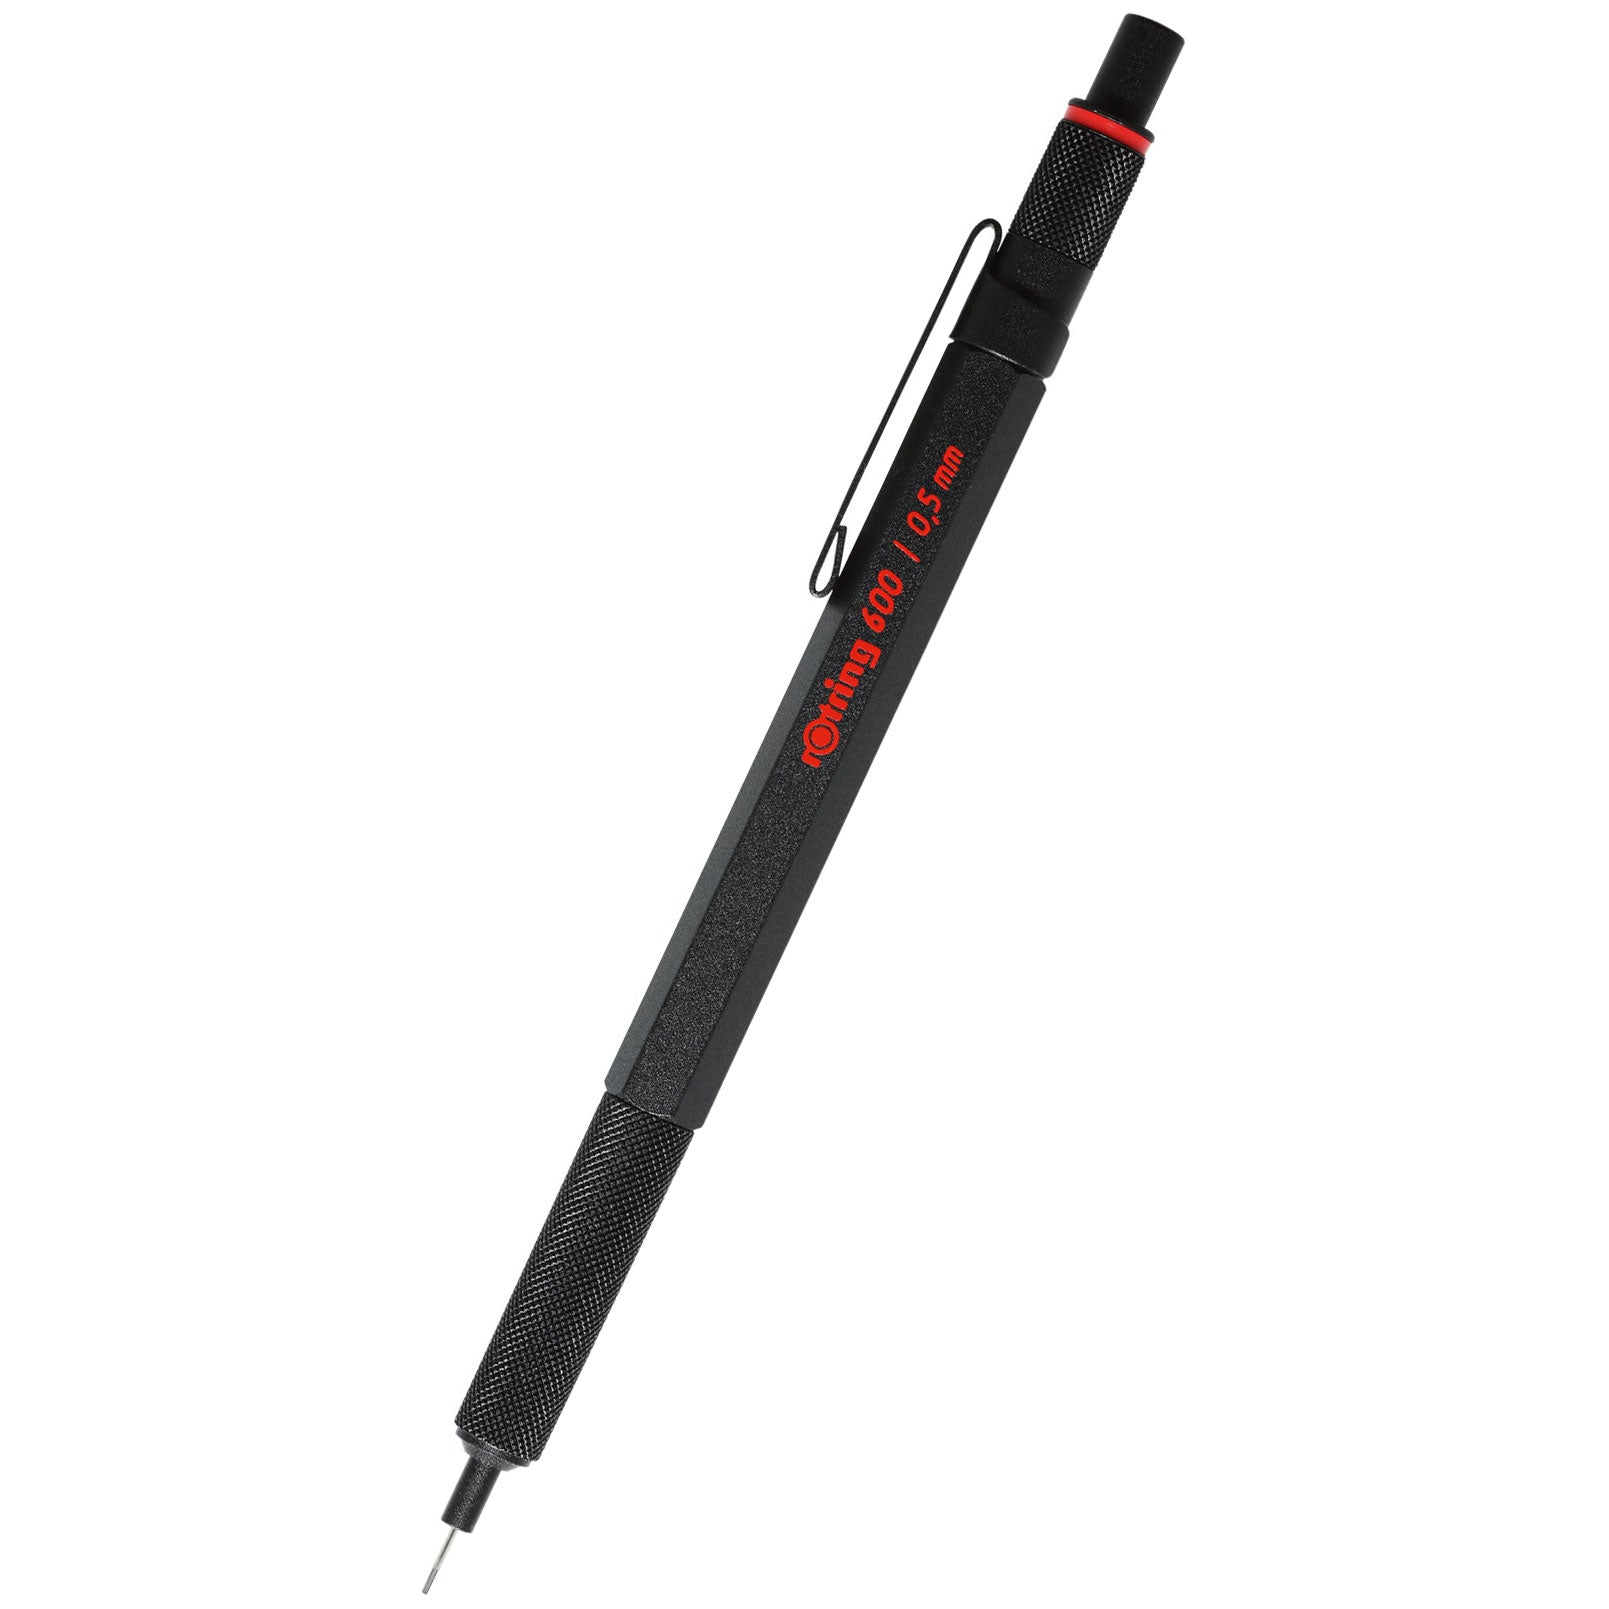  Rotring 600 Drafting Pencil - 0.5 mm - Black